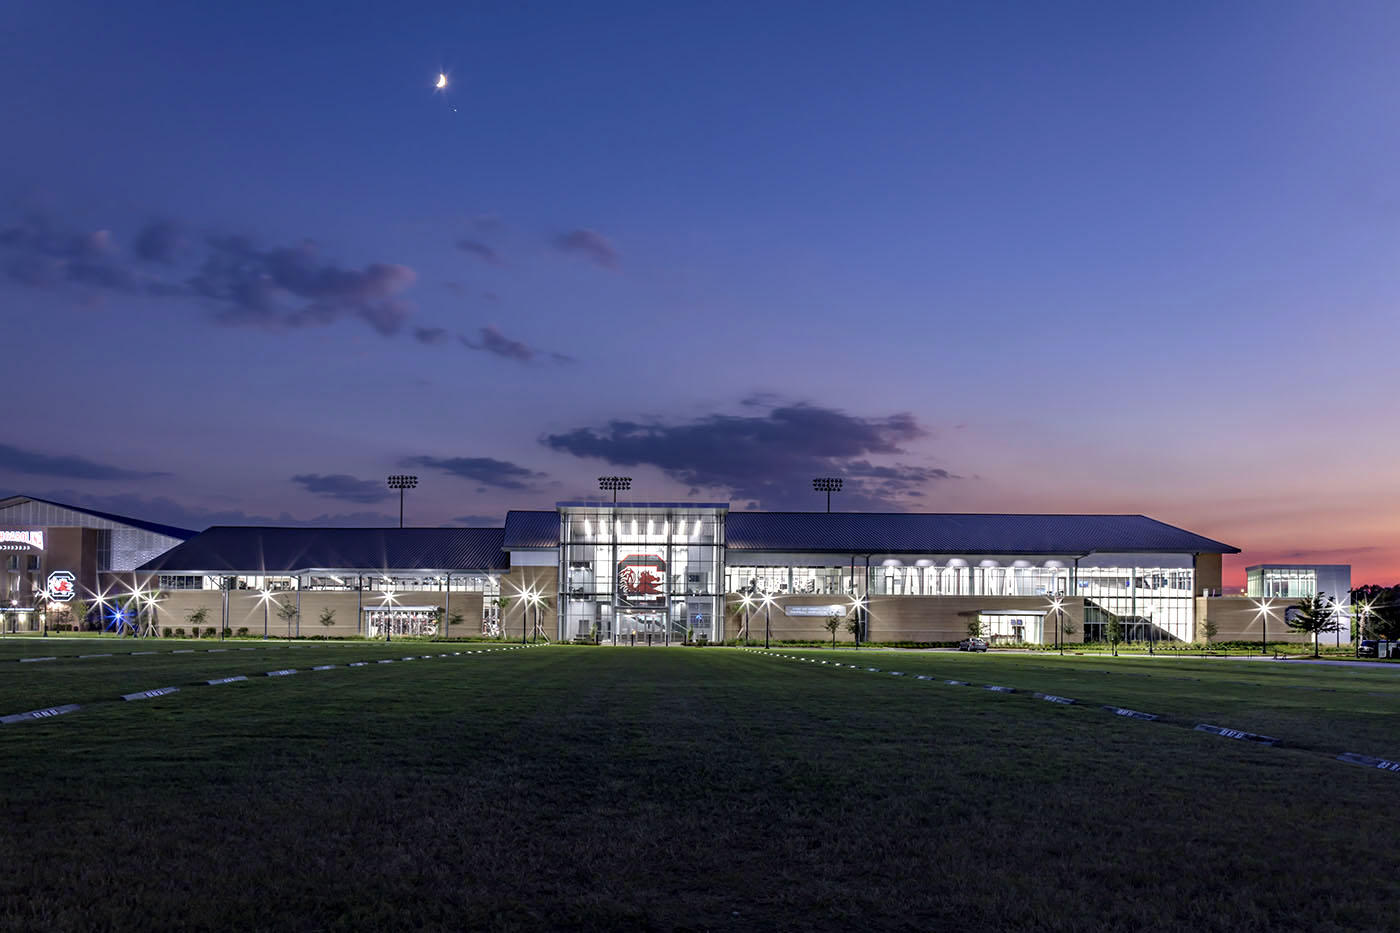 University of South Carolina Football Operations | Quackenbush Architects with Genslet